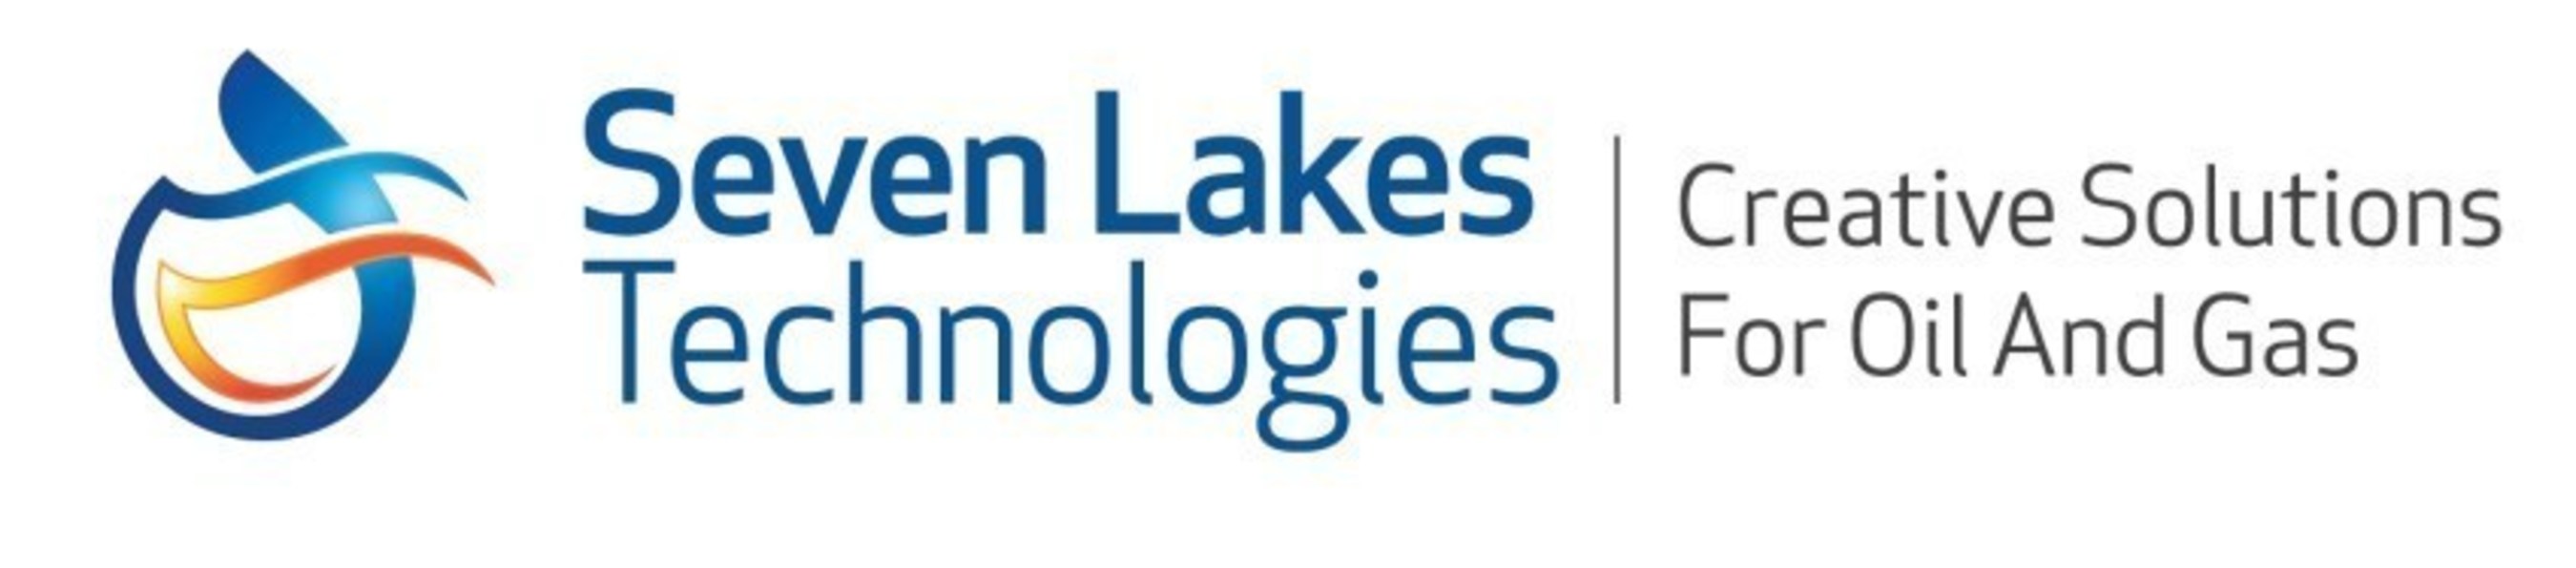 Seven Lakes Technologies Logo